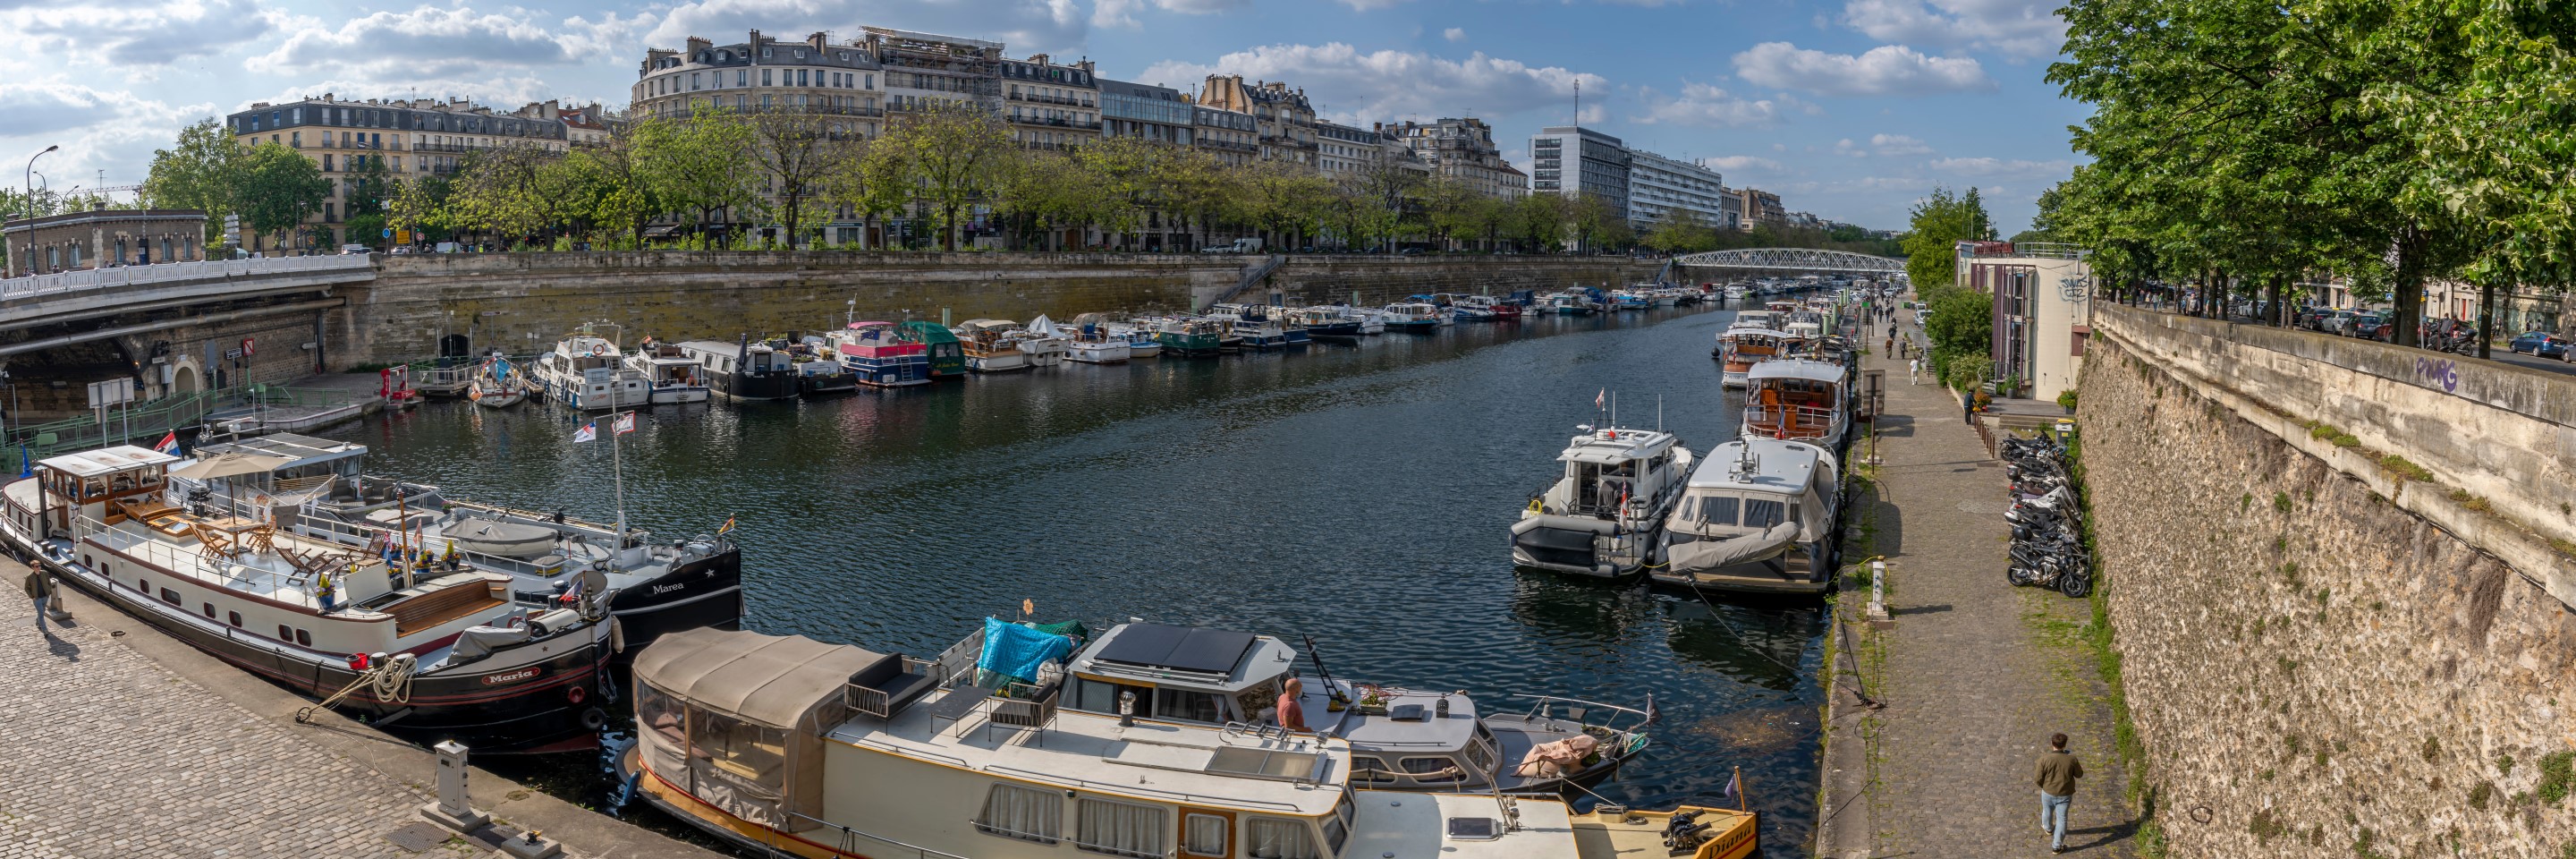 Paris_Canal_Saint-Martin